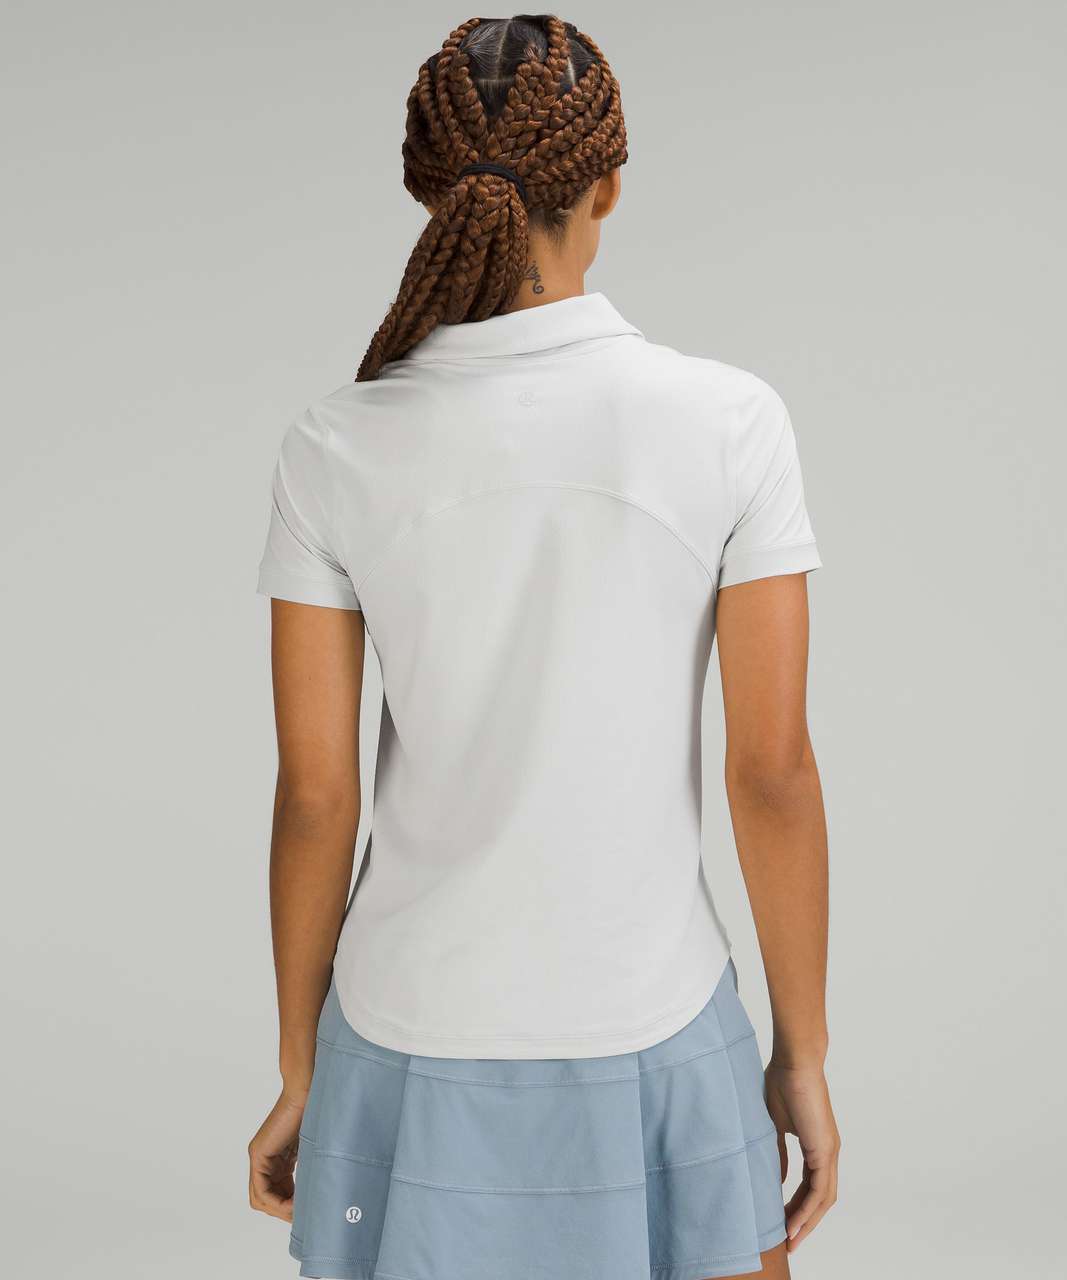 Lululemon Quick-Drying Short Sleeve Polo Shirt - Vapor